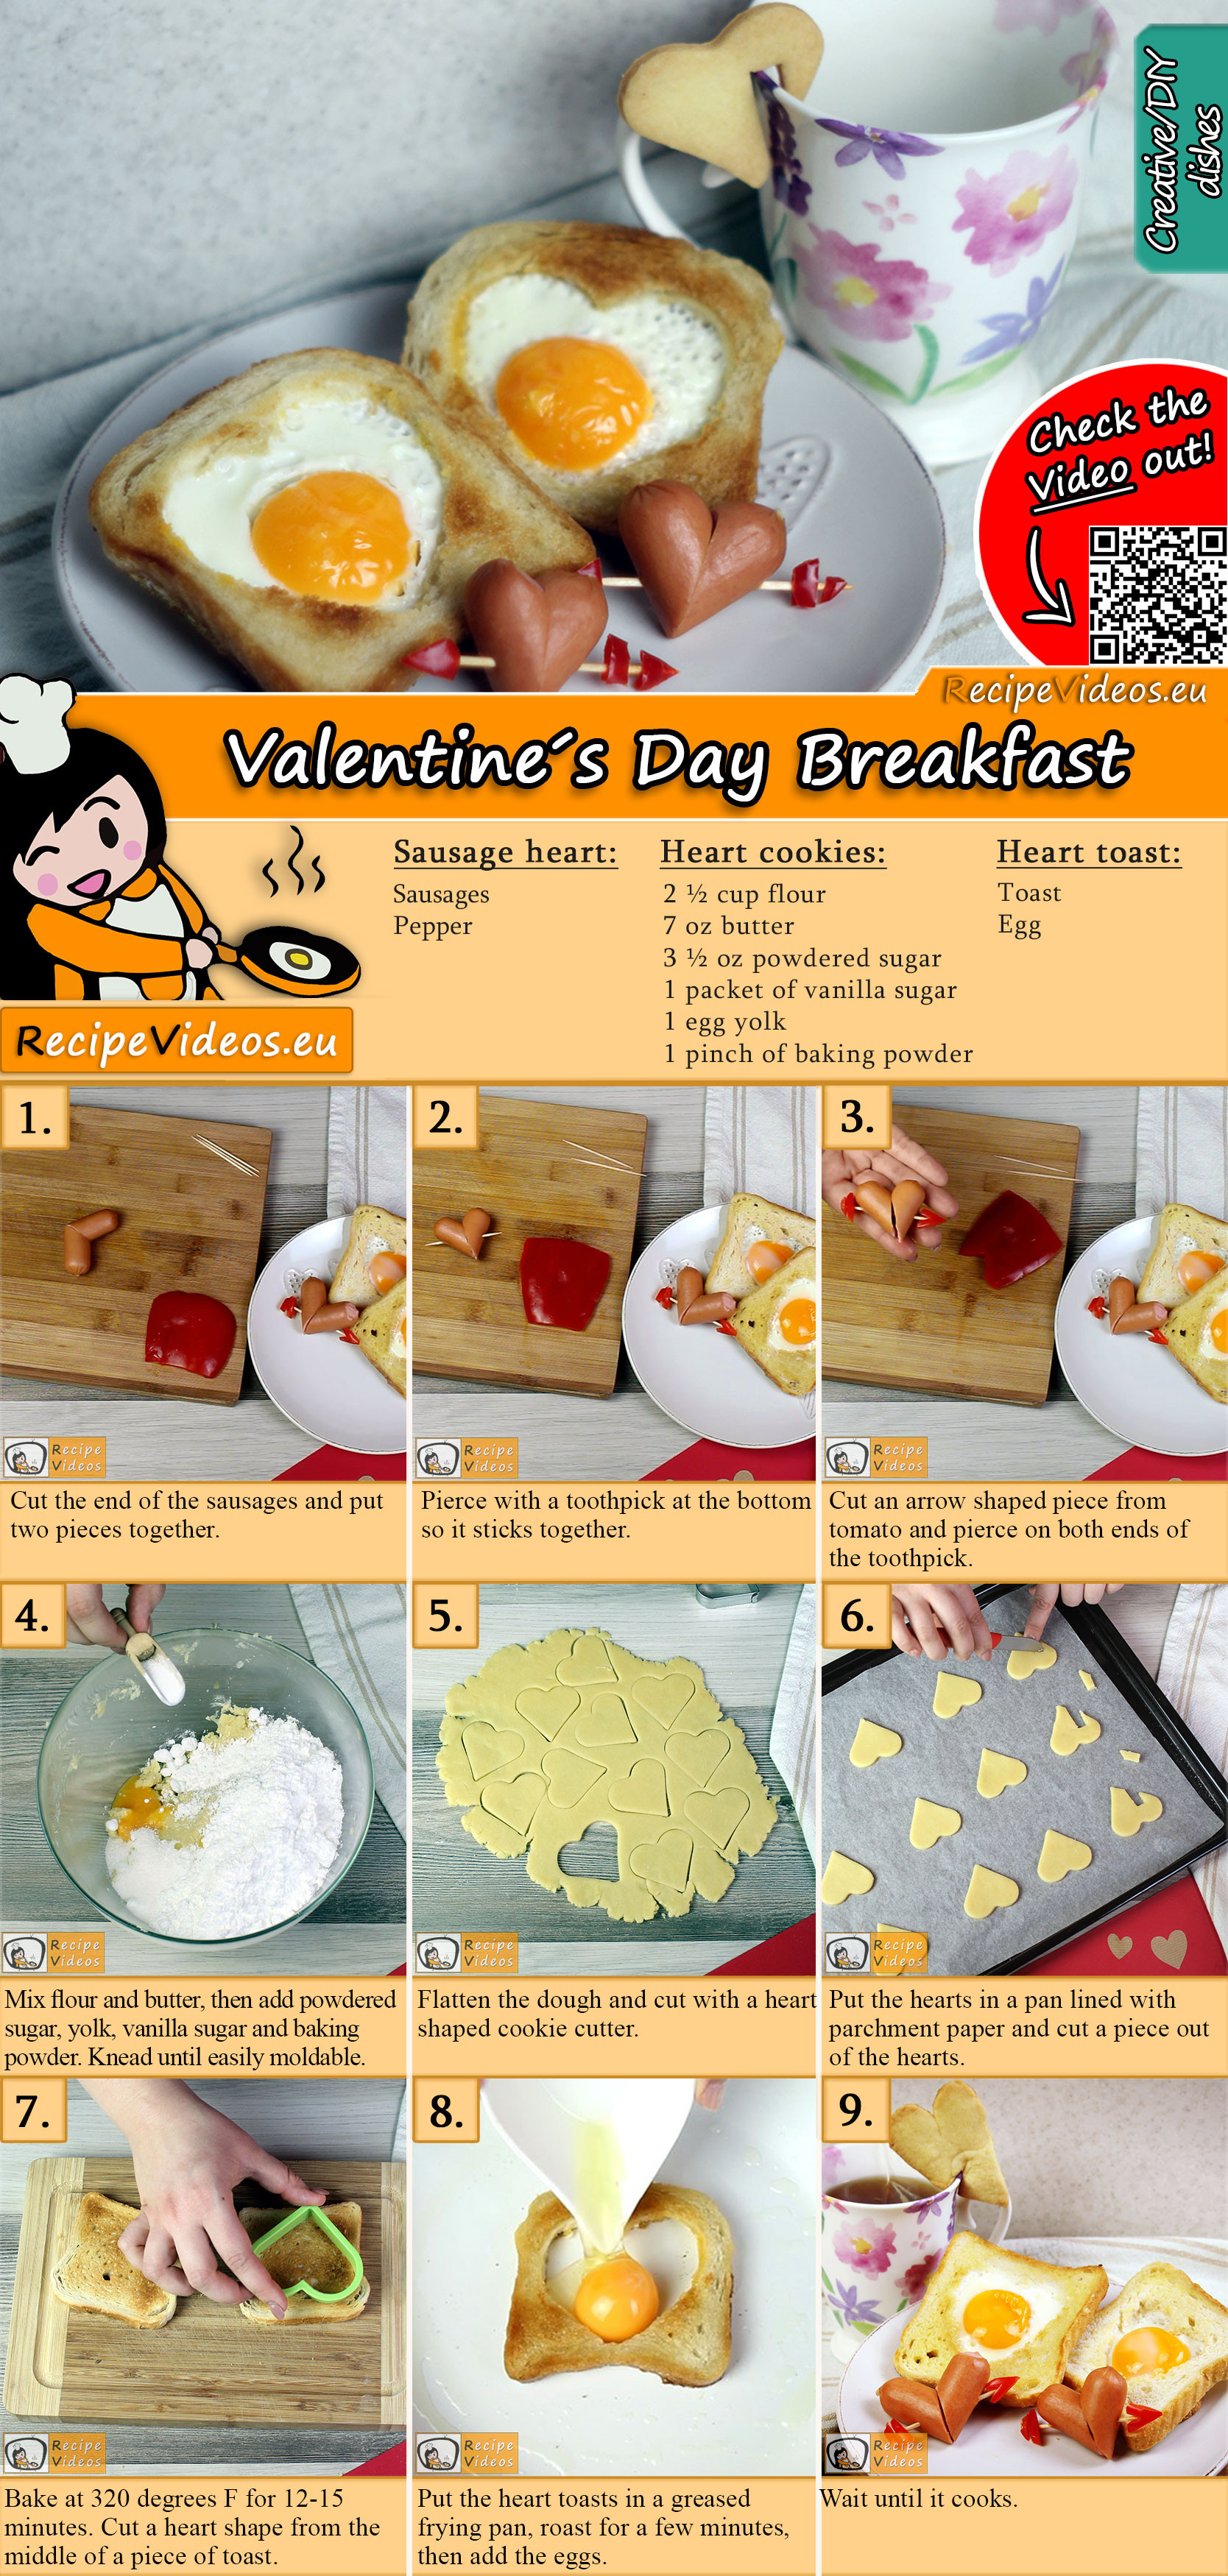 Valentine’s Day Breakfast recipe with video